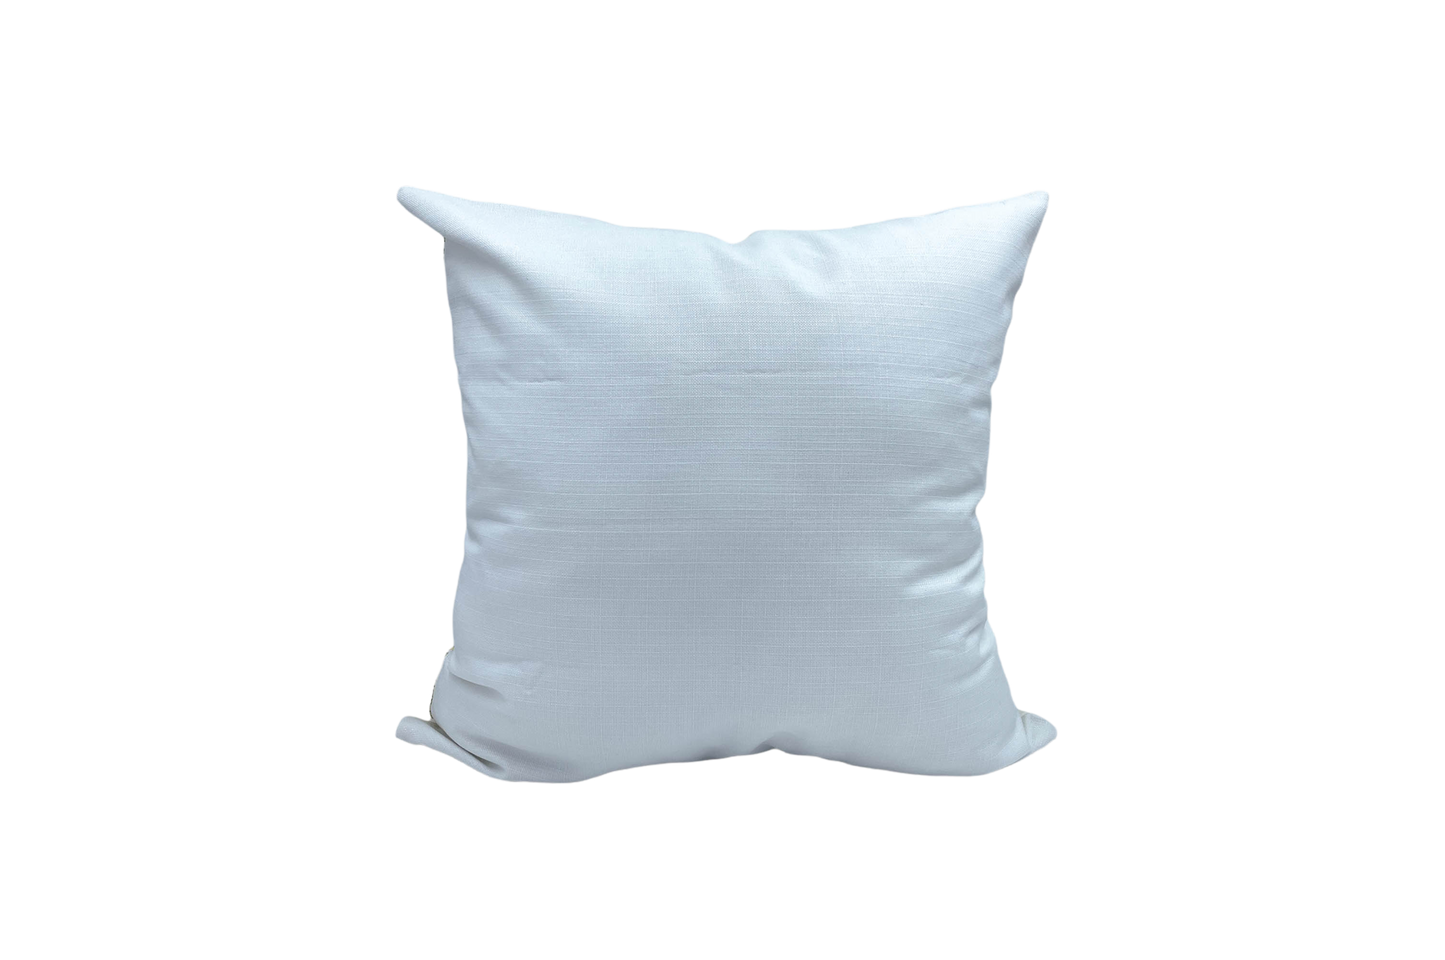 Green Oval Medallion - Sustainable Décor Pillows